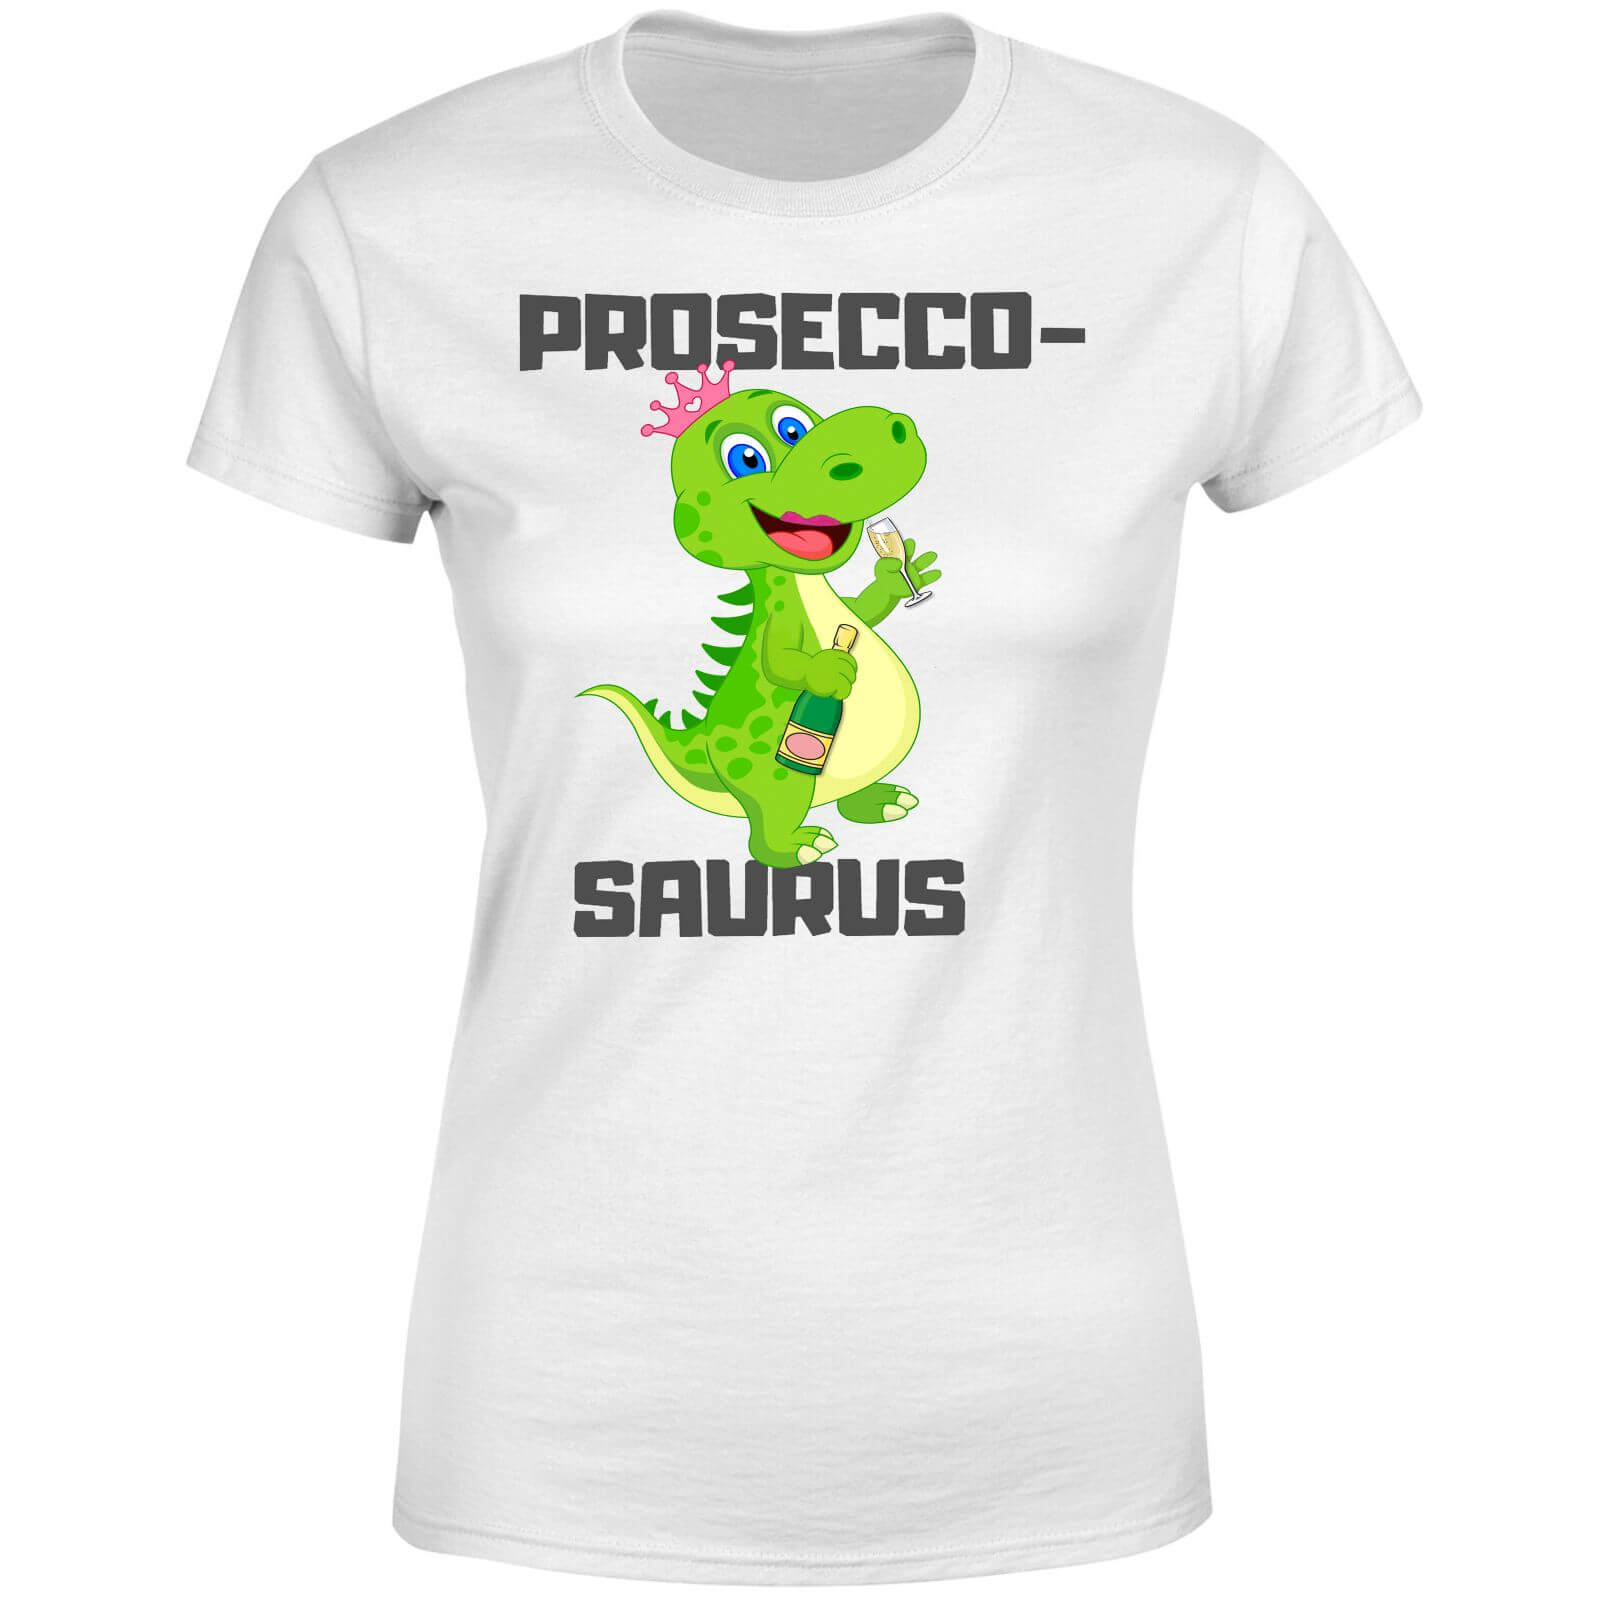 Be My Pretty Prosecco-Saurus Women's T-Shirt - White - 4XL - White